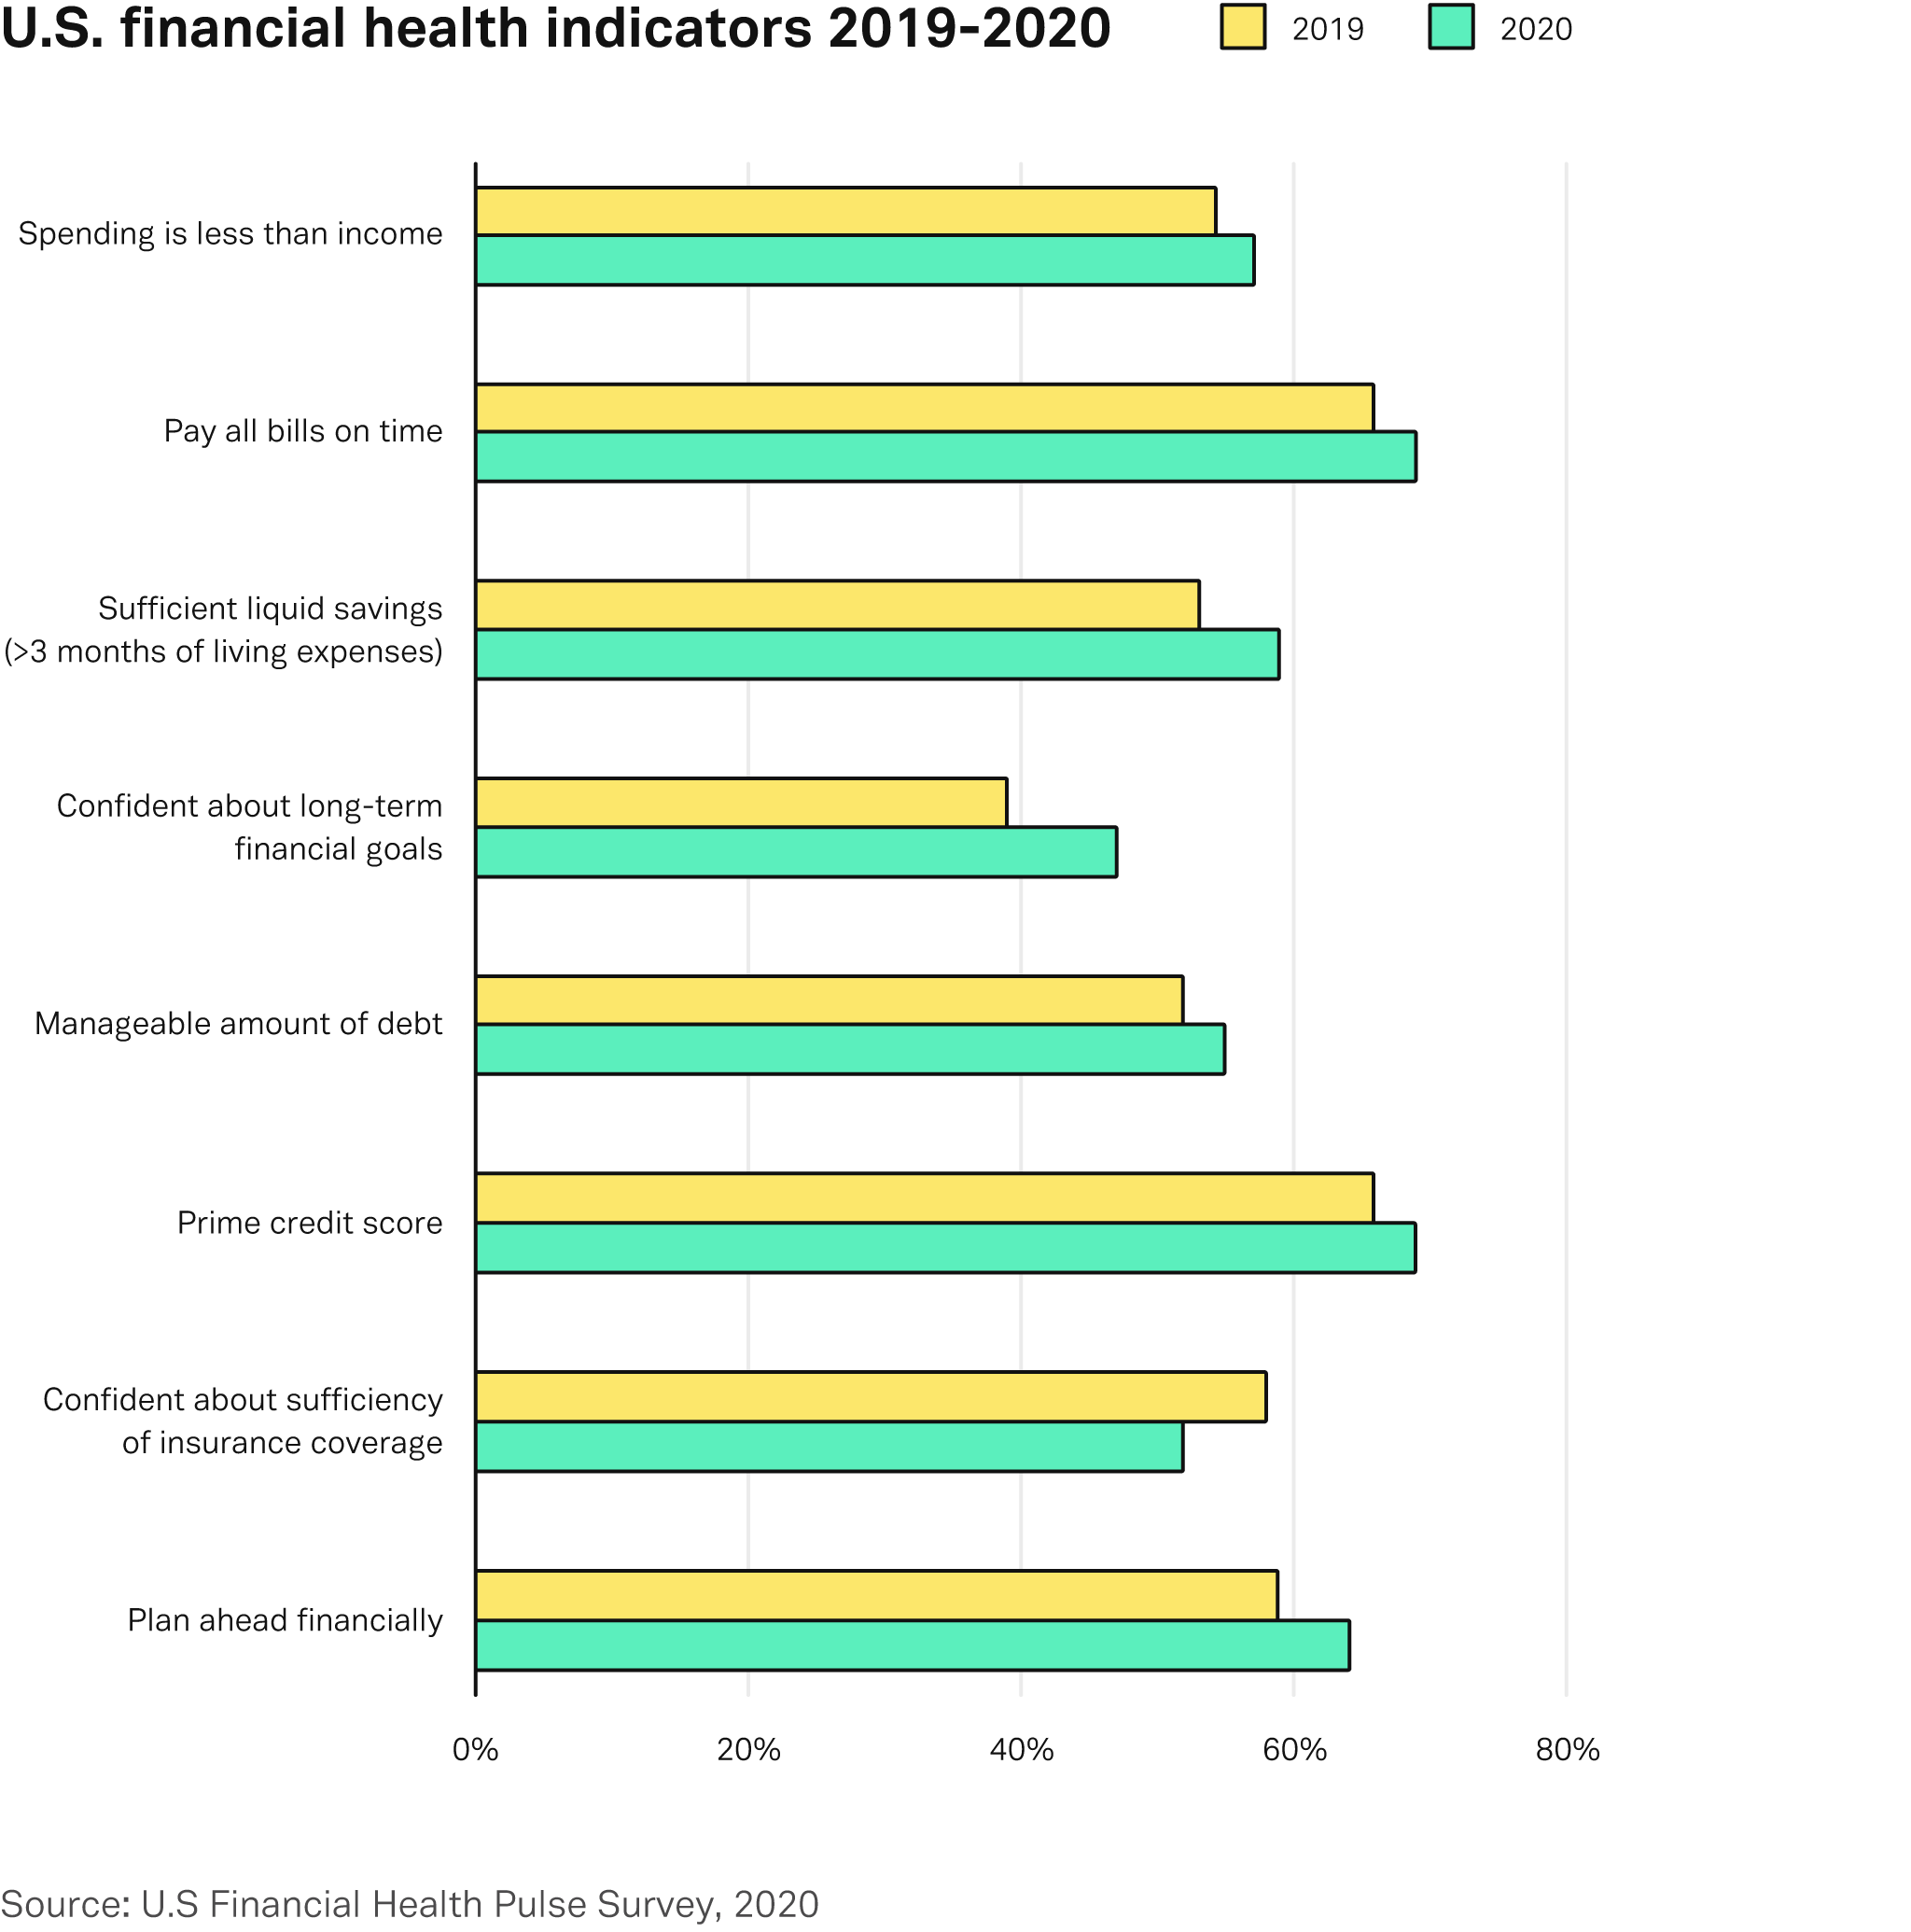 2019-2020 changes across financial health indicators
